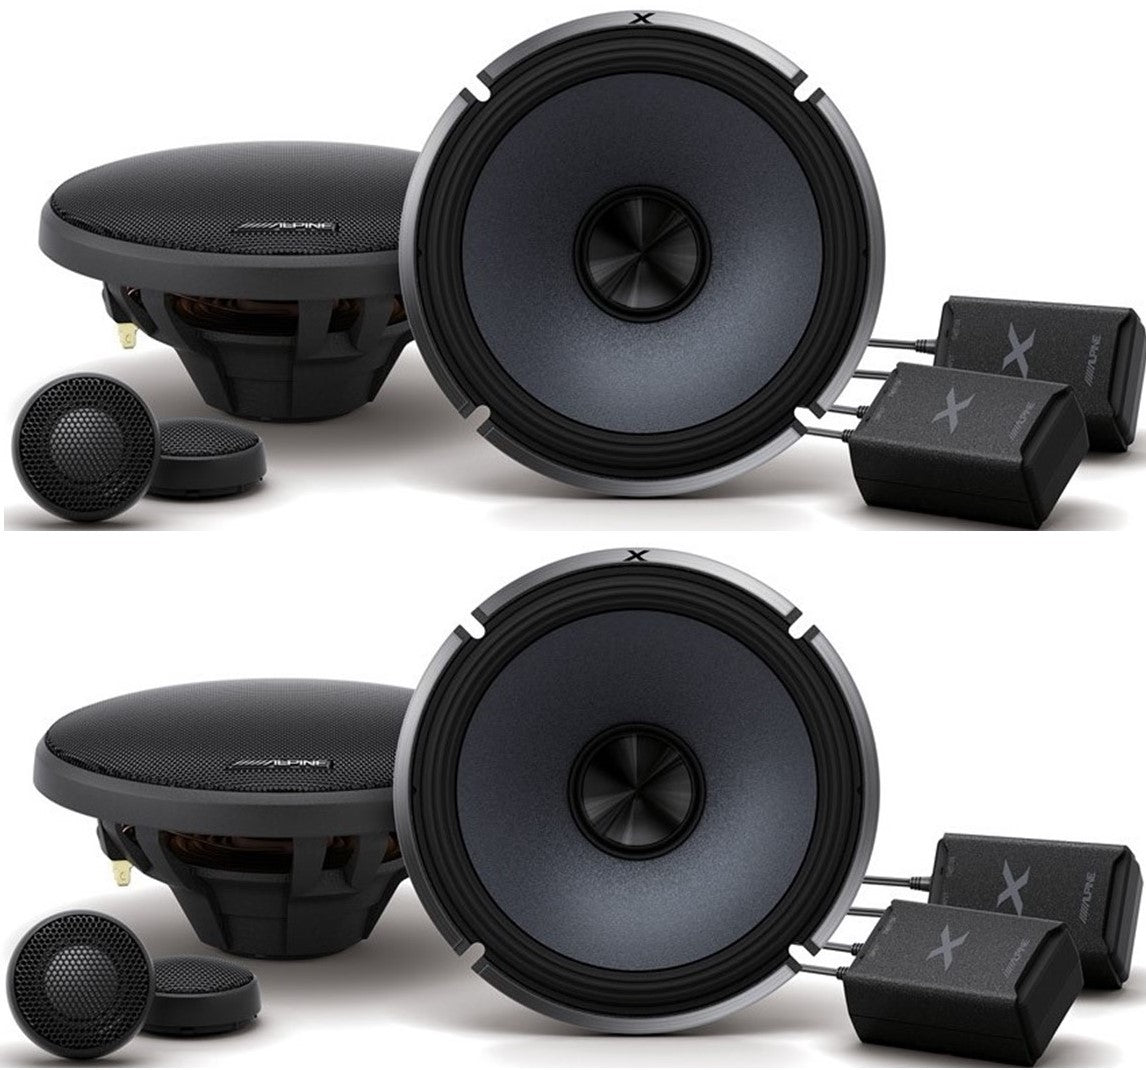 2 Pairs ALPINE X-S65C X-Series 6-1/2" component speaker system